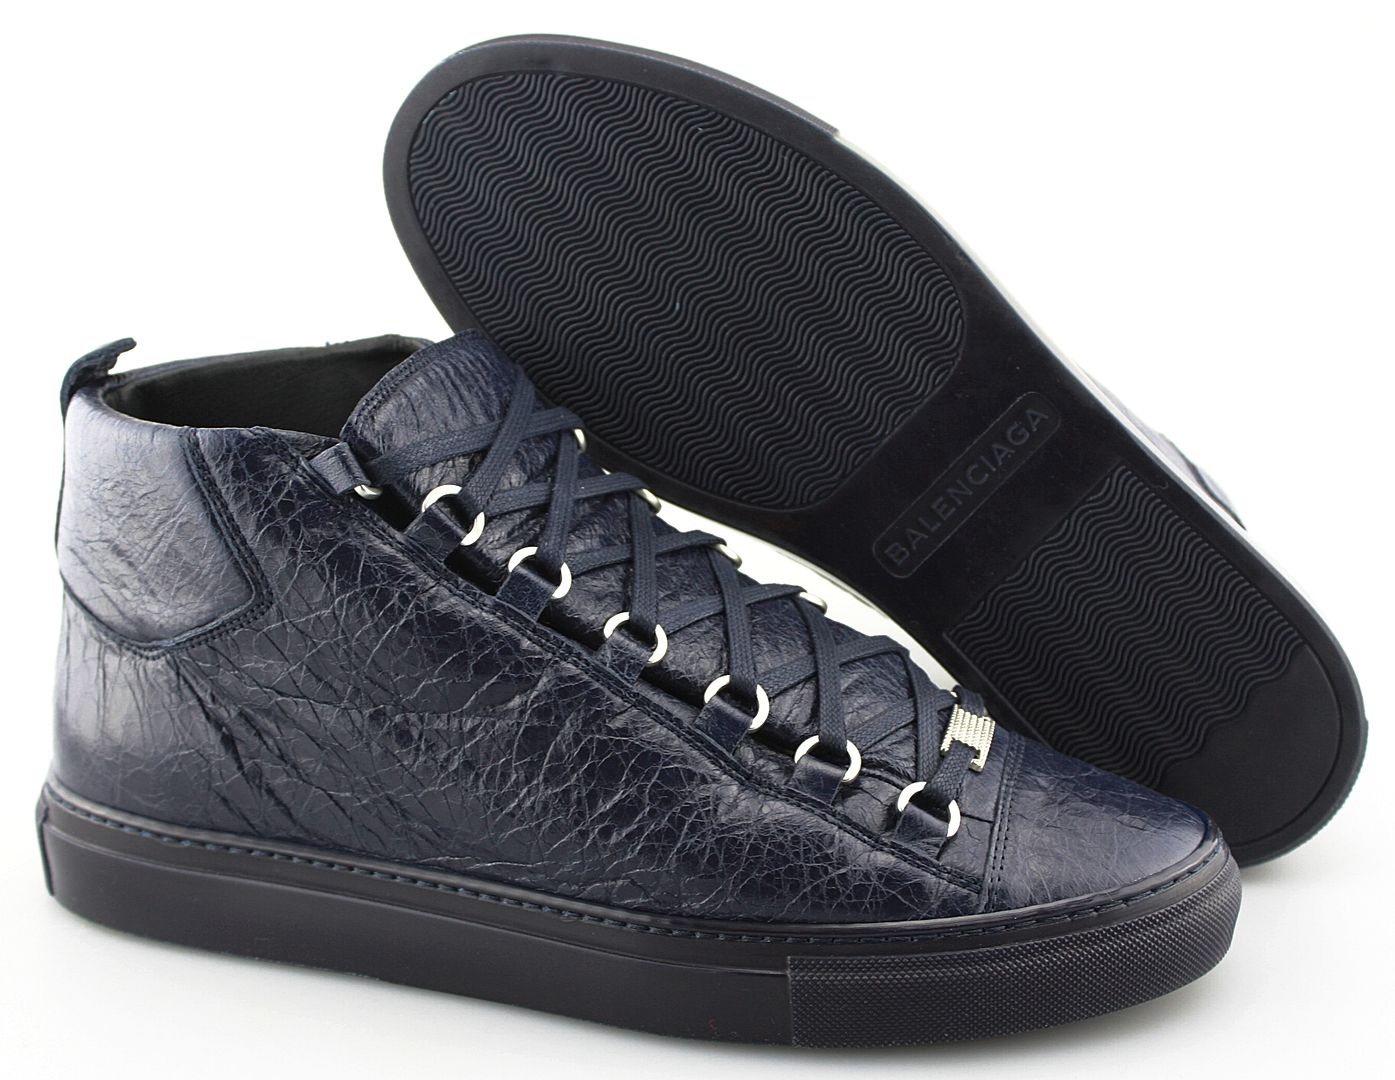 Men's BALENCIAGA 'Arena' Navy Blue Leather Sneakers Size US 8 EUR 41 | eBay